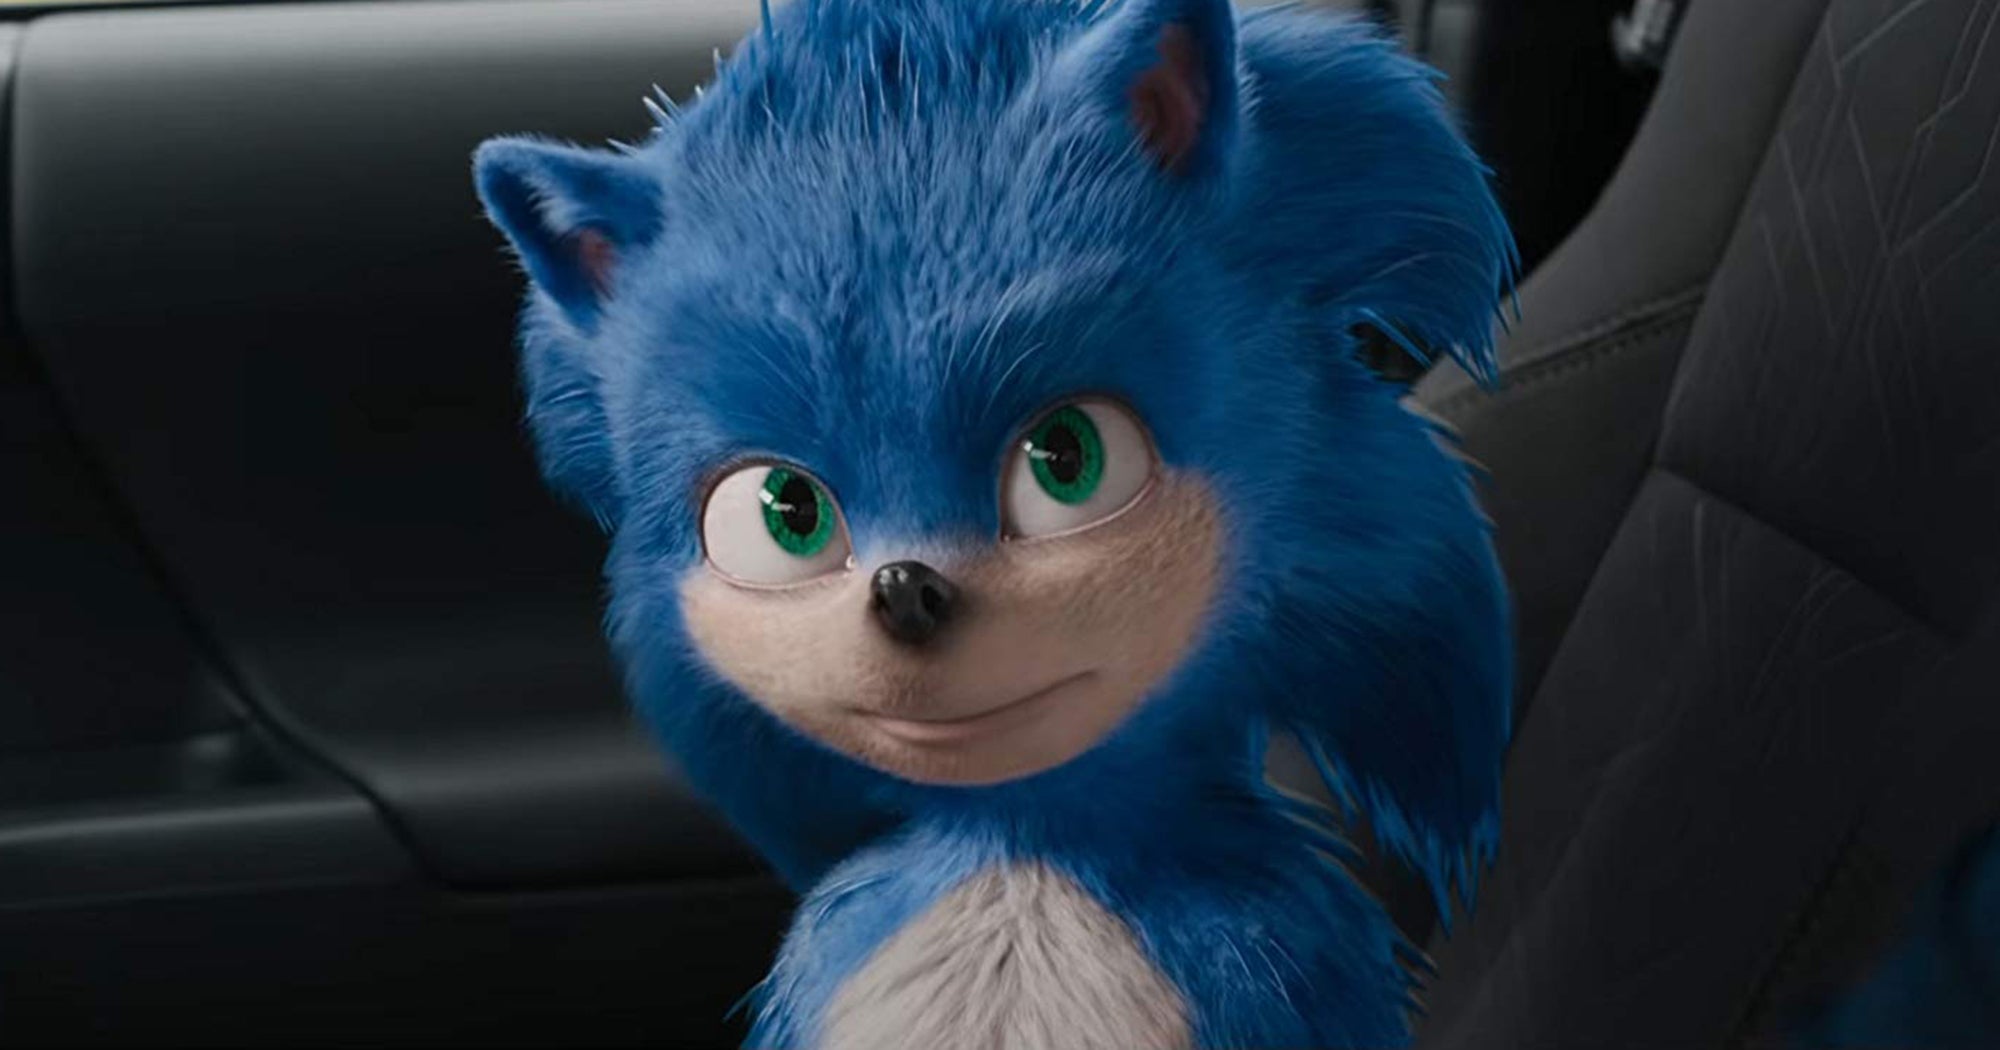 Sonic 2 to arrive on German Netflix for Christmas : r/SonicTheHedgehog